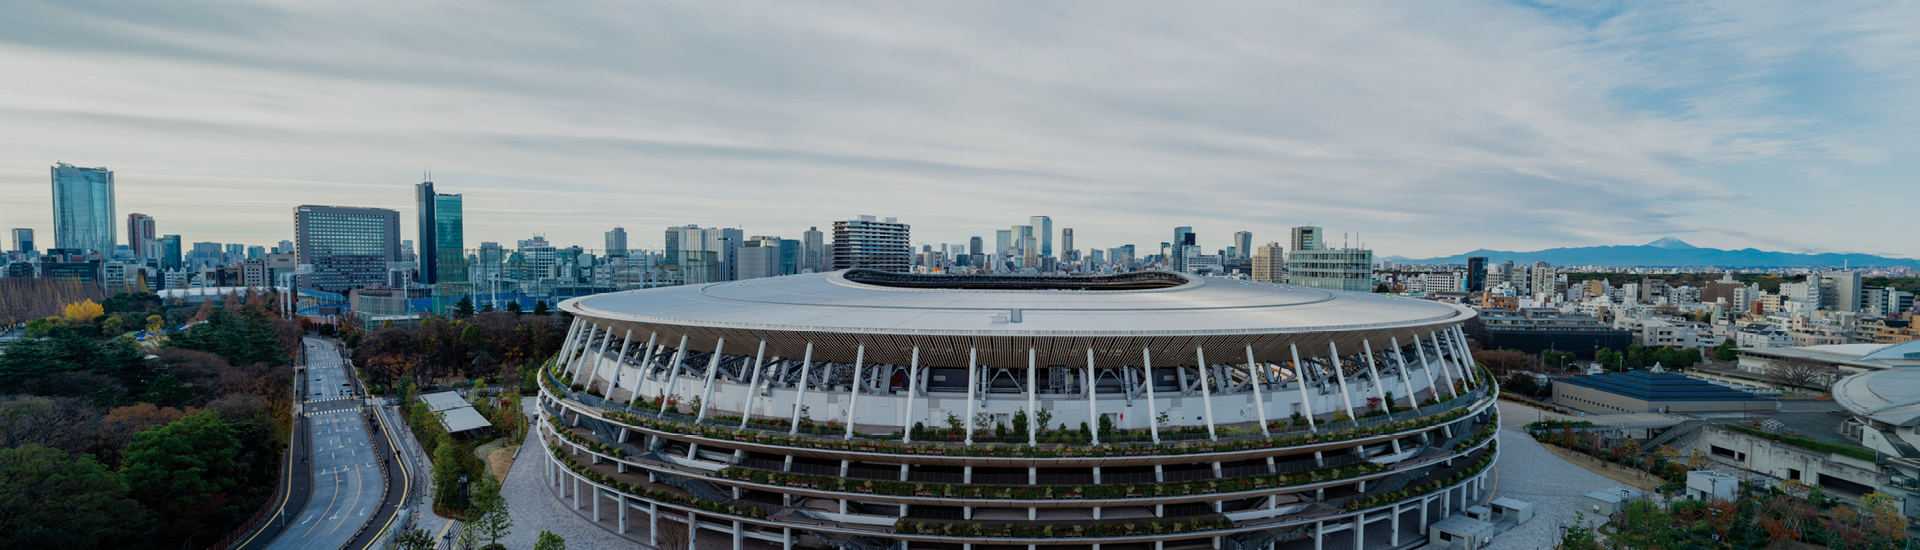 Estádio Olímpico - Tóquio